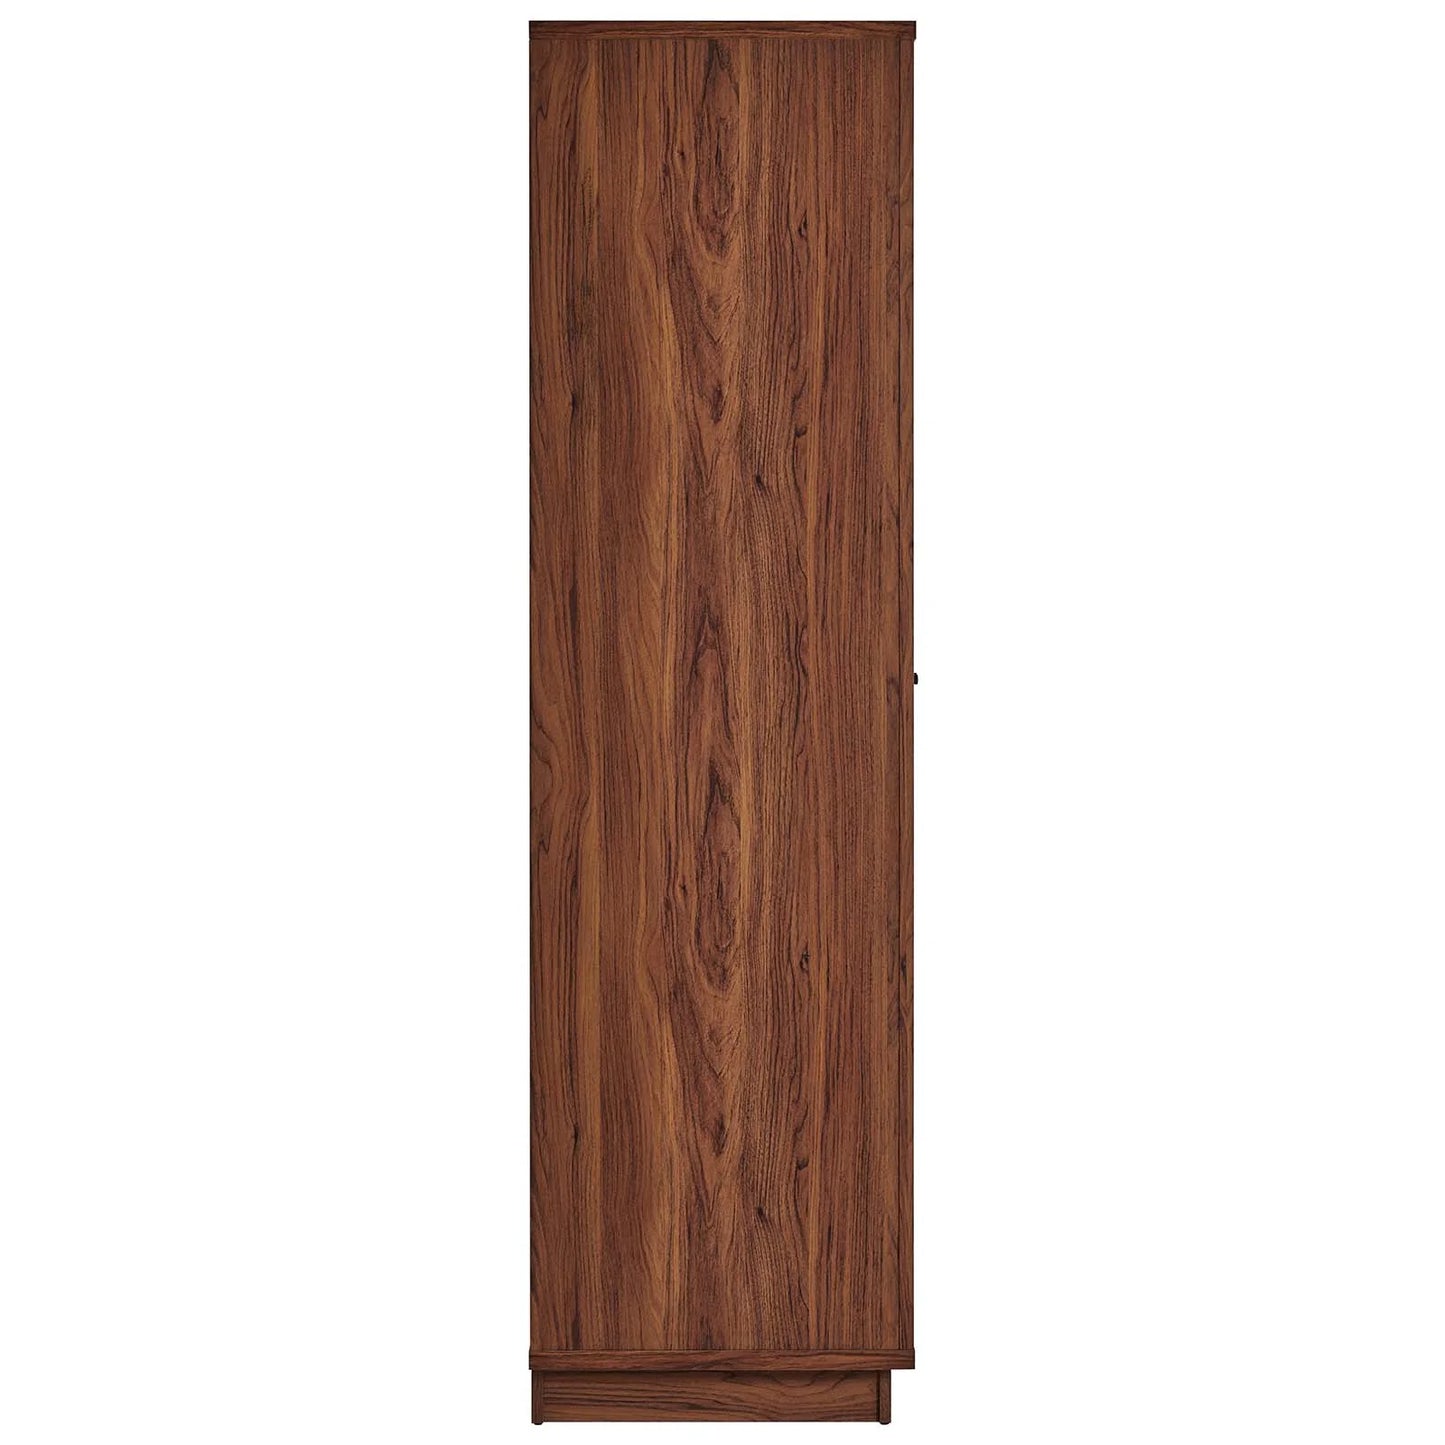 Aspen 70" Tall Wood Grain Storage Cabinet